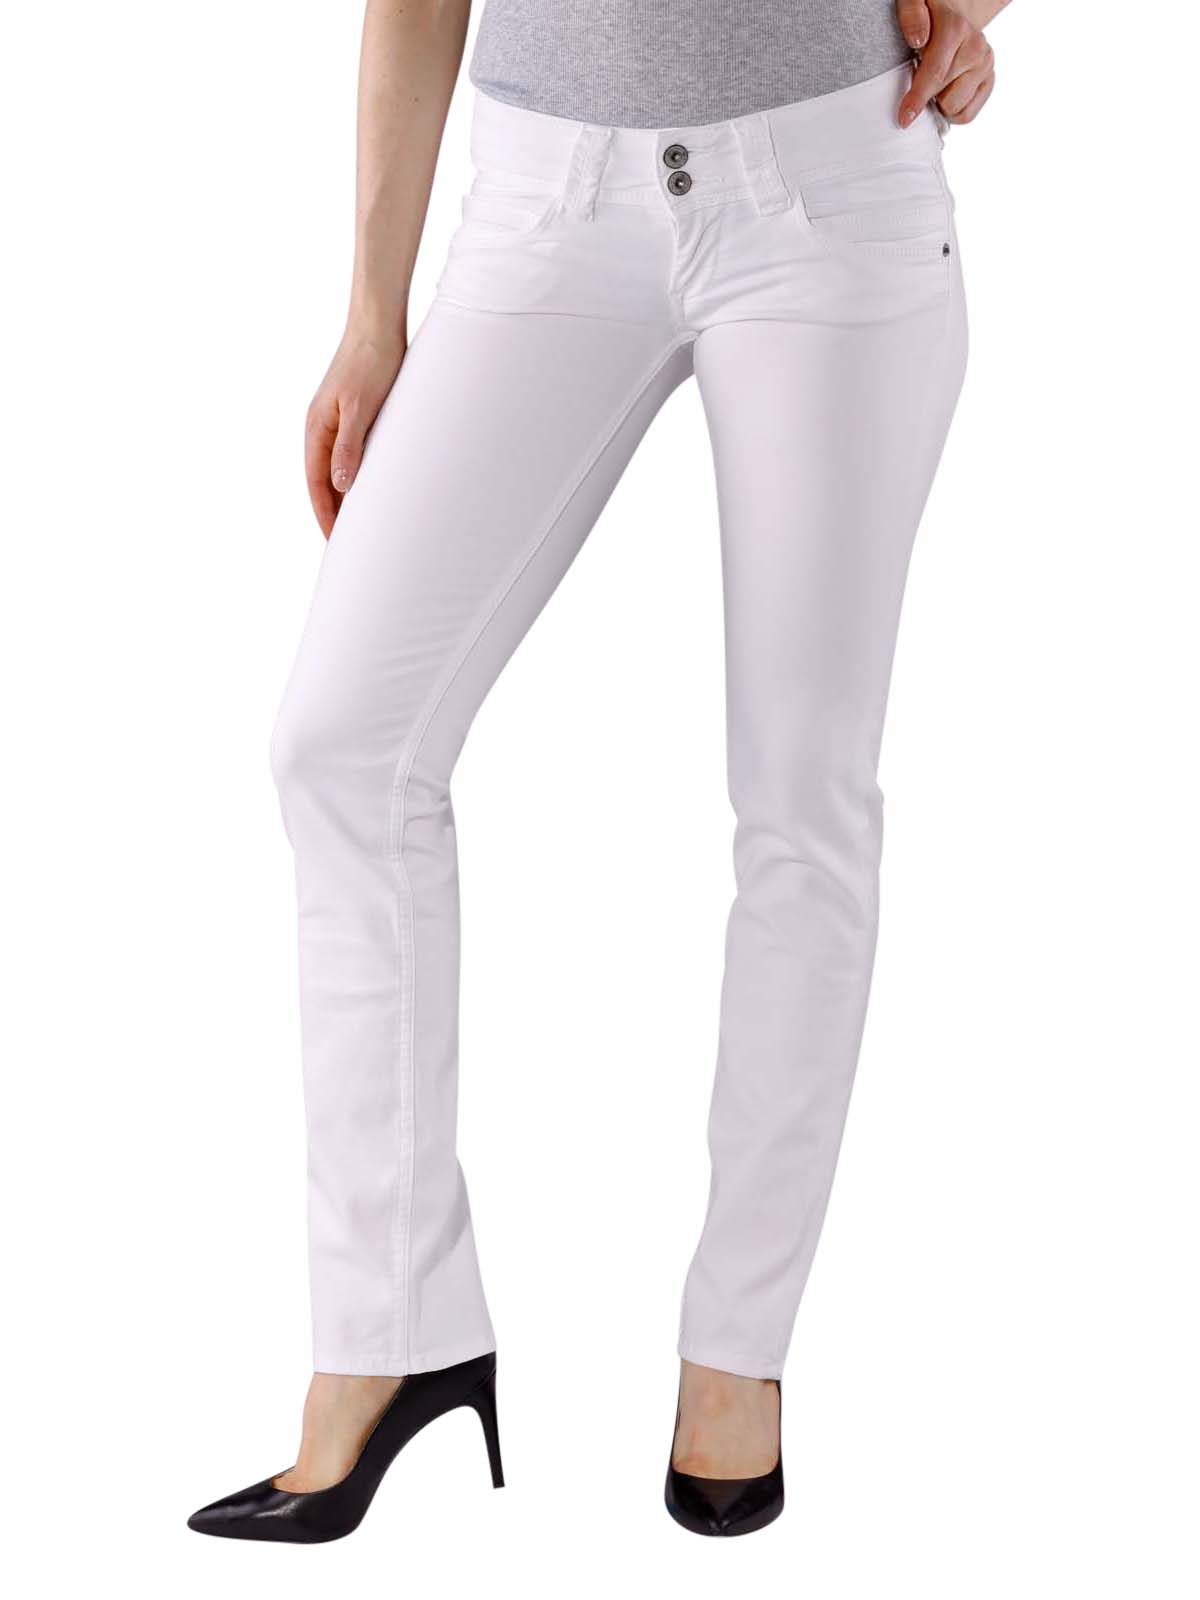 venus white jeans